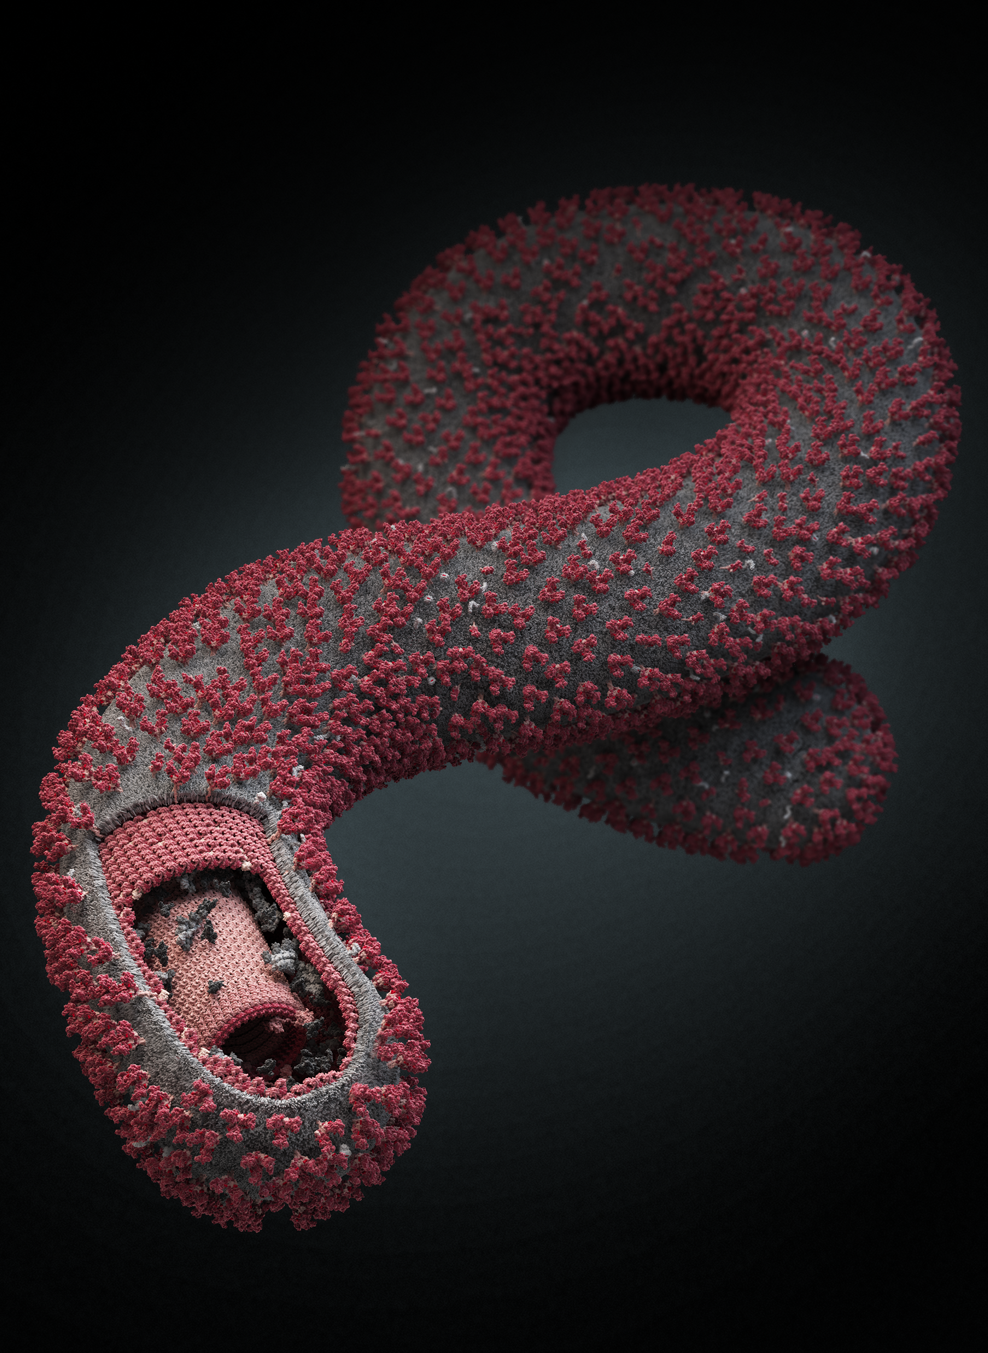 Illustration of the Ebola virus 